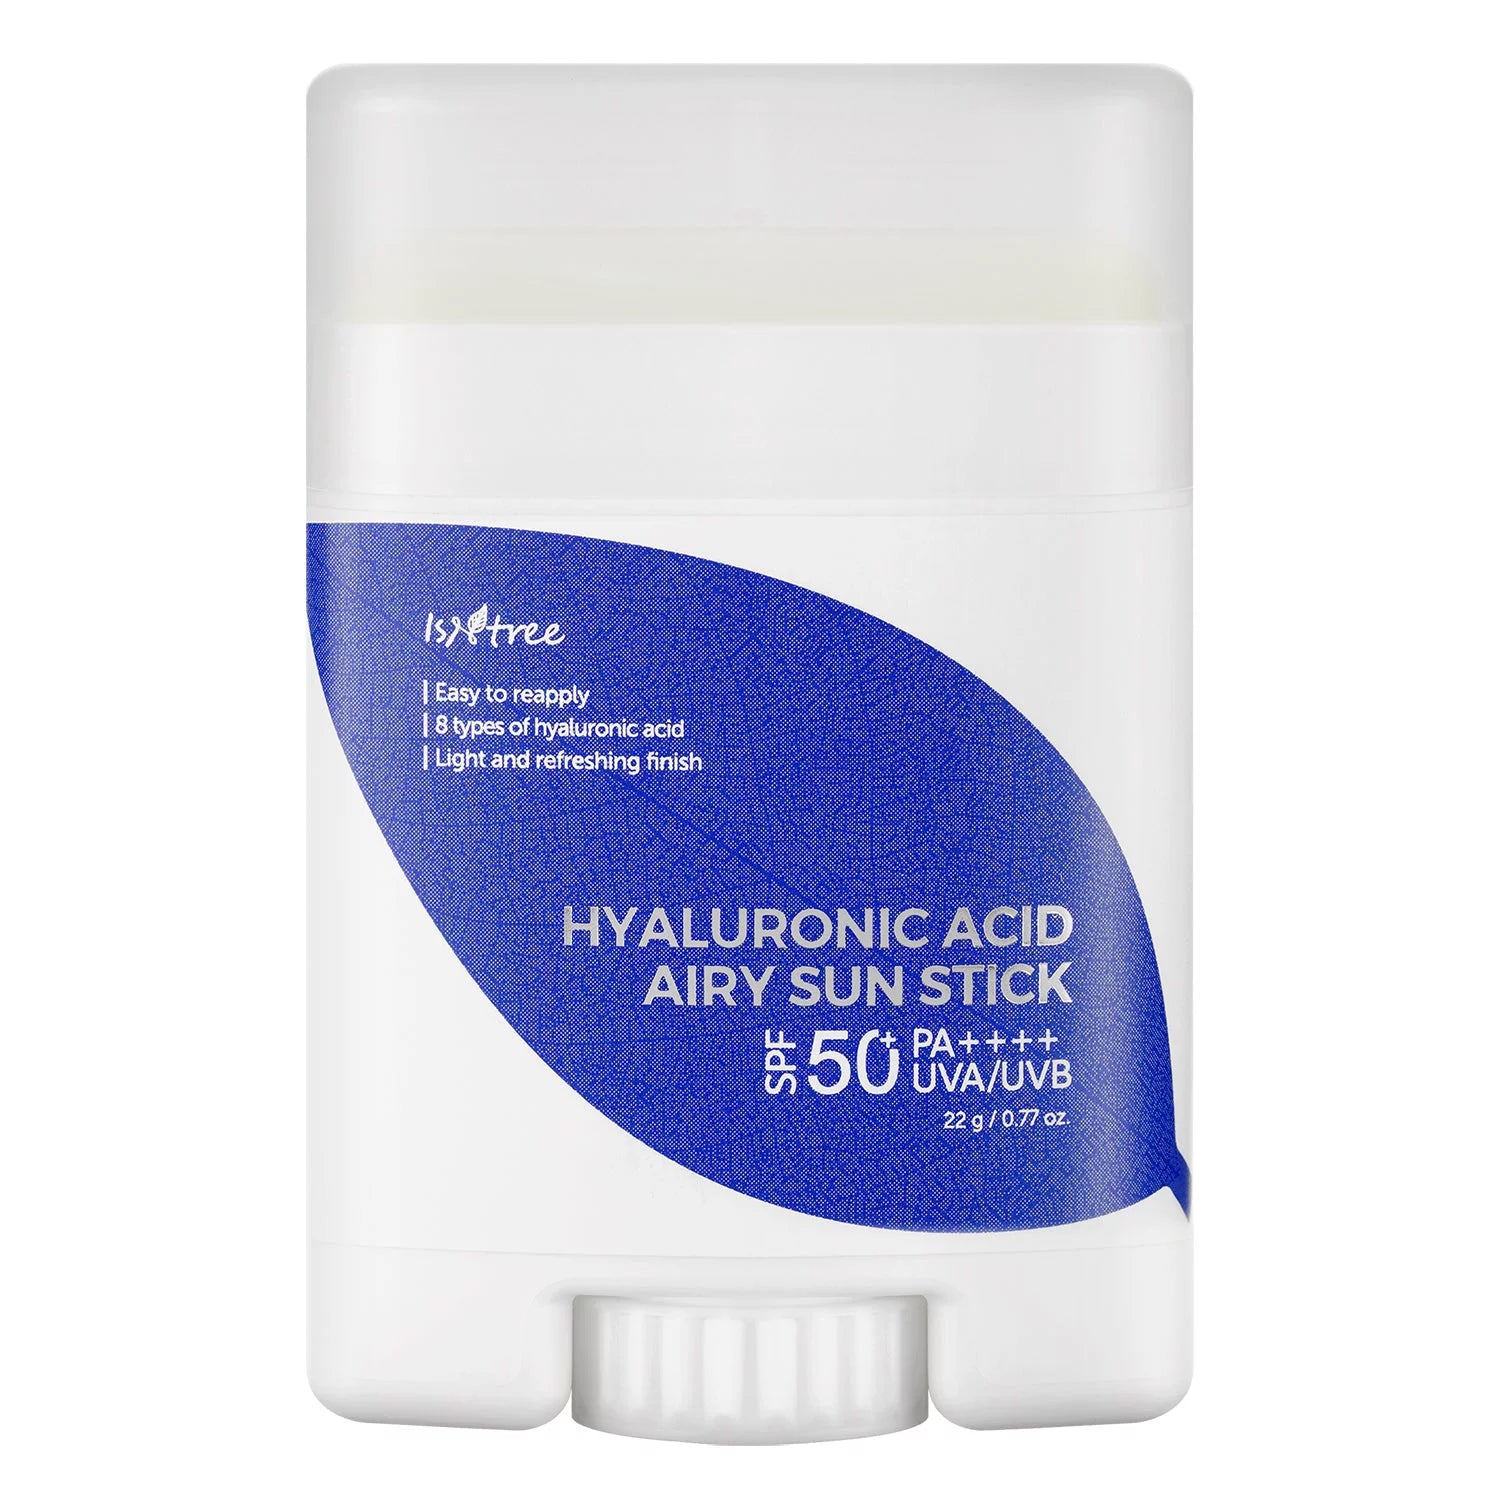 Hyaluronic Acid Airy Sun Stick